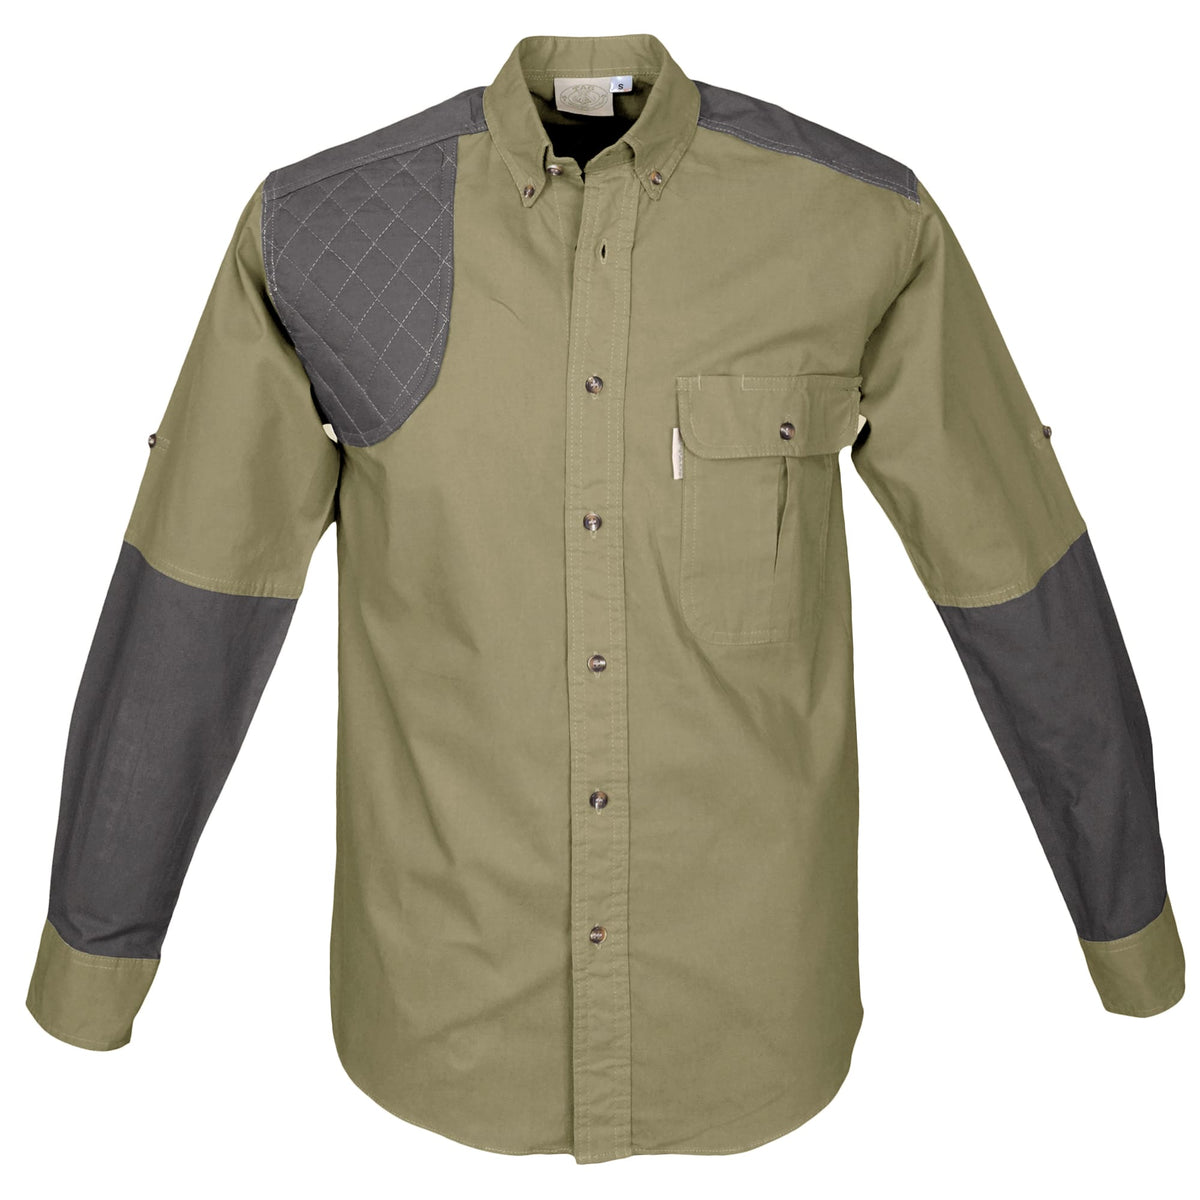 Upland Shirt For Men - L-Sleeve